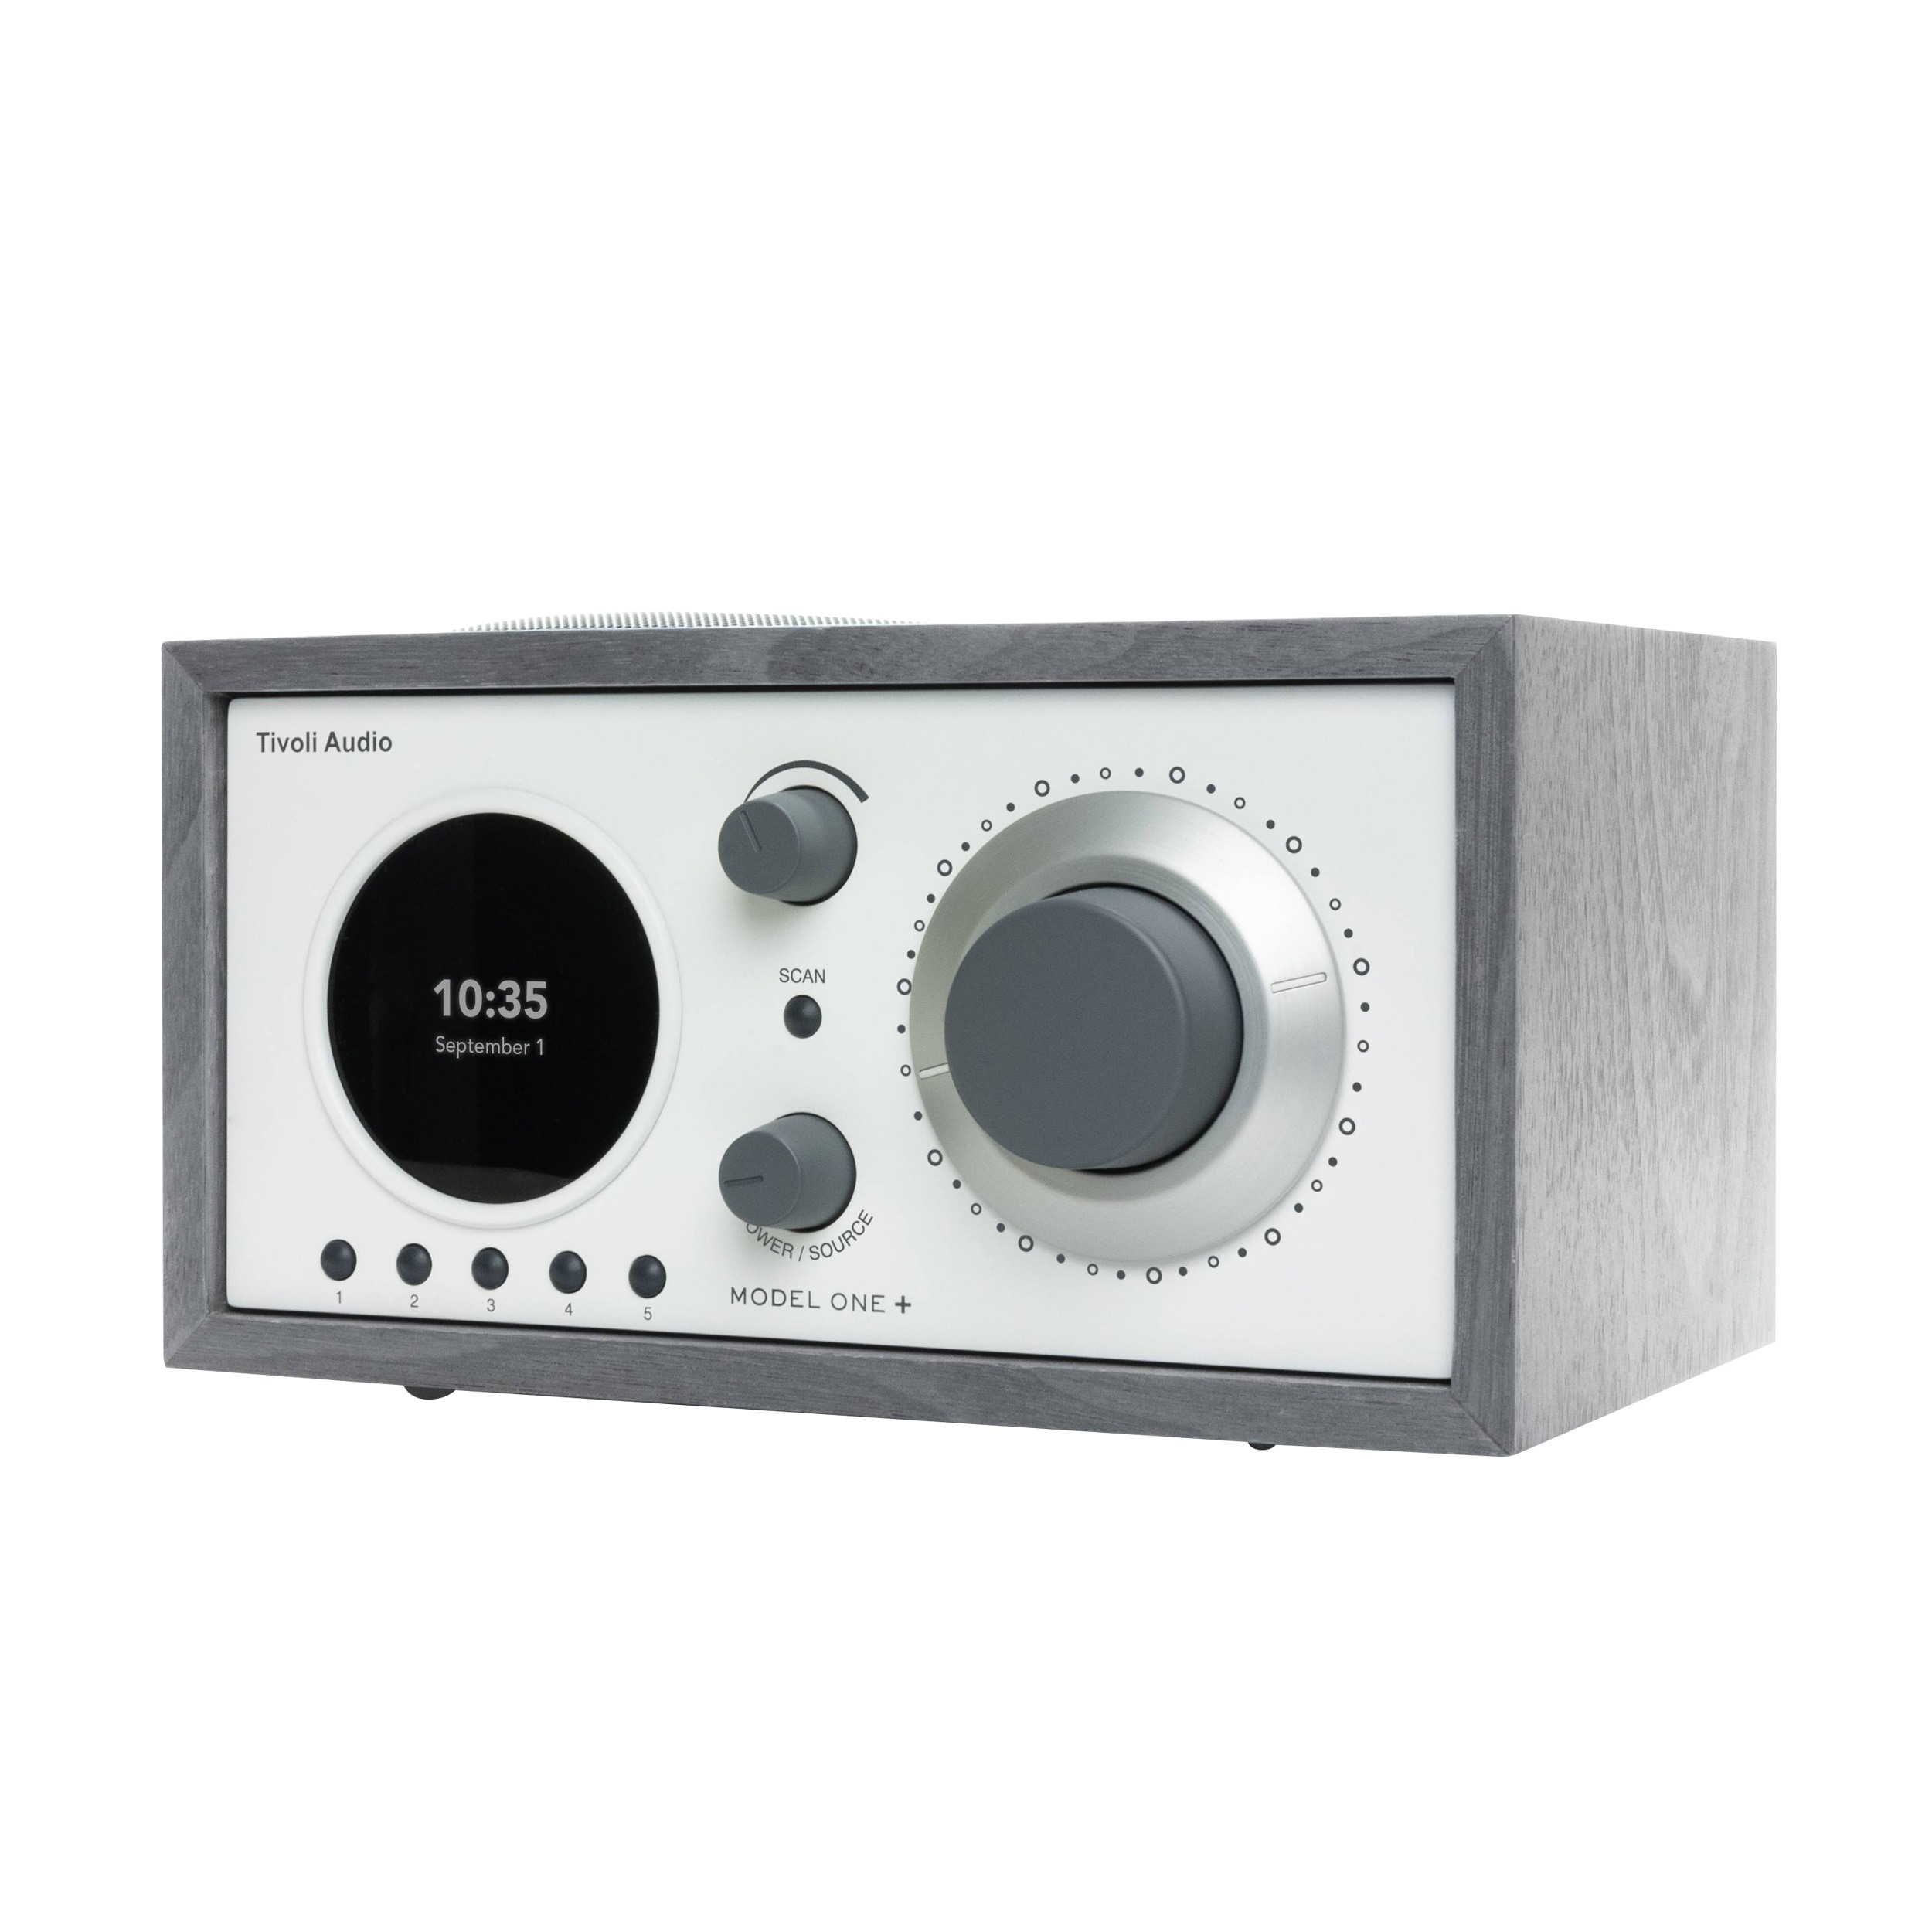 Tivoli Audio Model One+ Radio